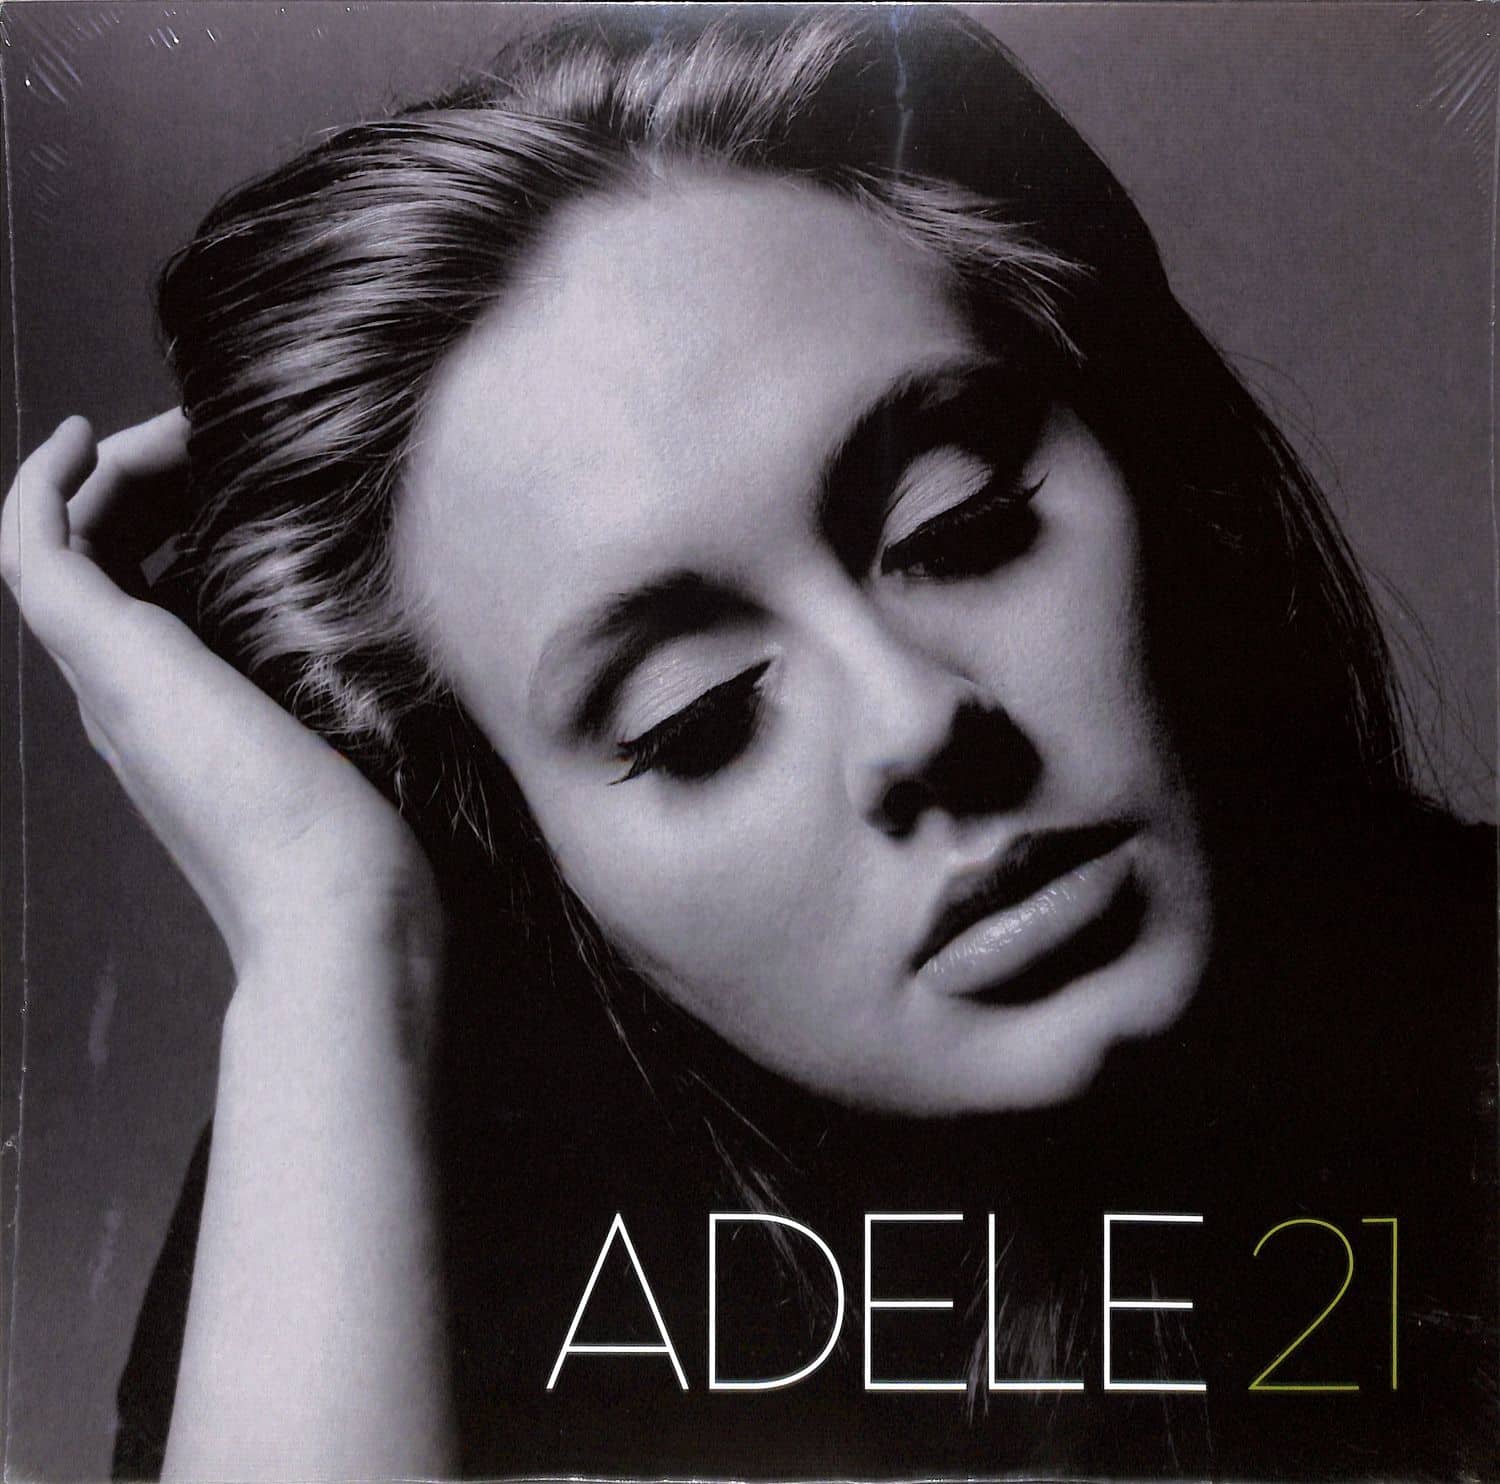 Adele - 21 